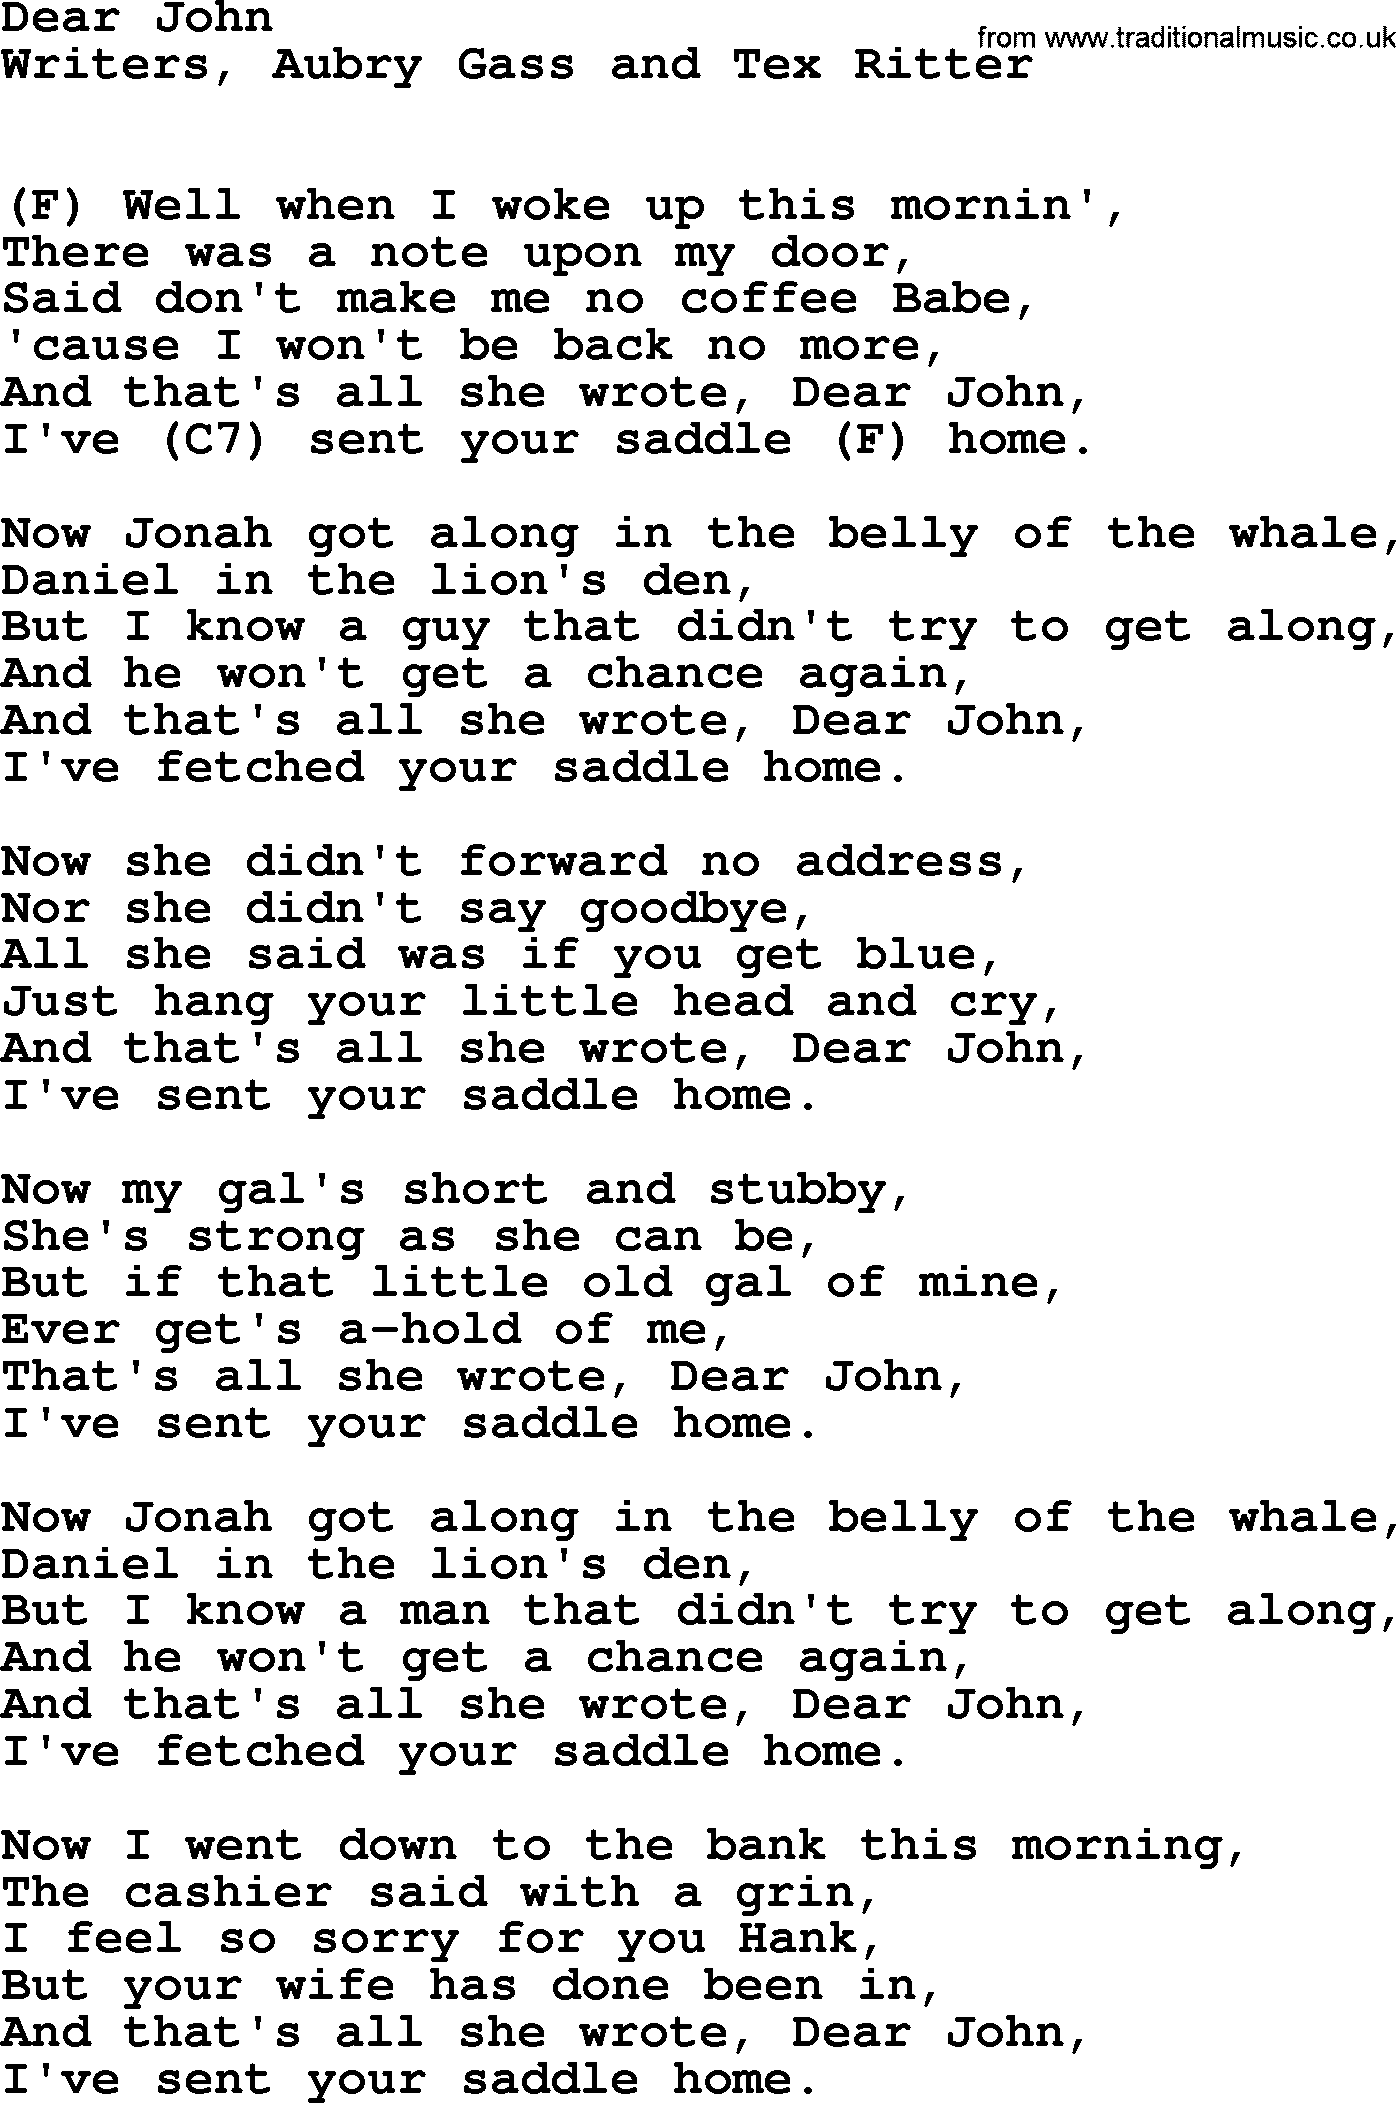 Hank Williams song Dear John, lyrics and chords